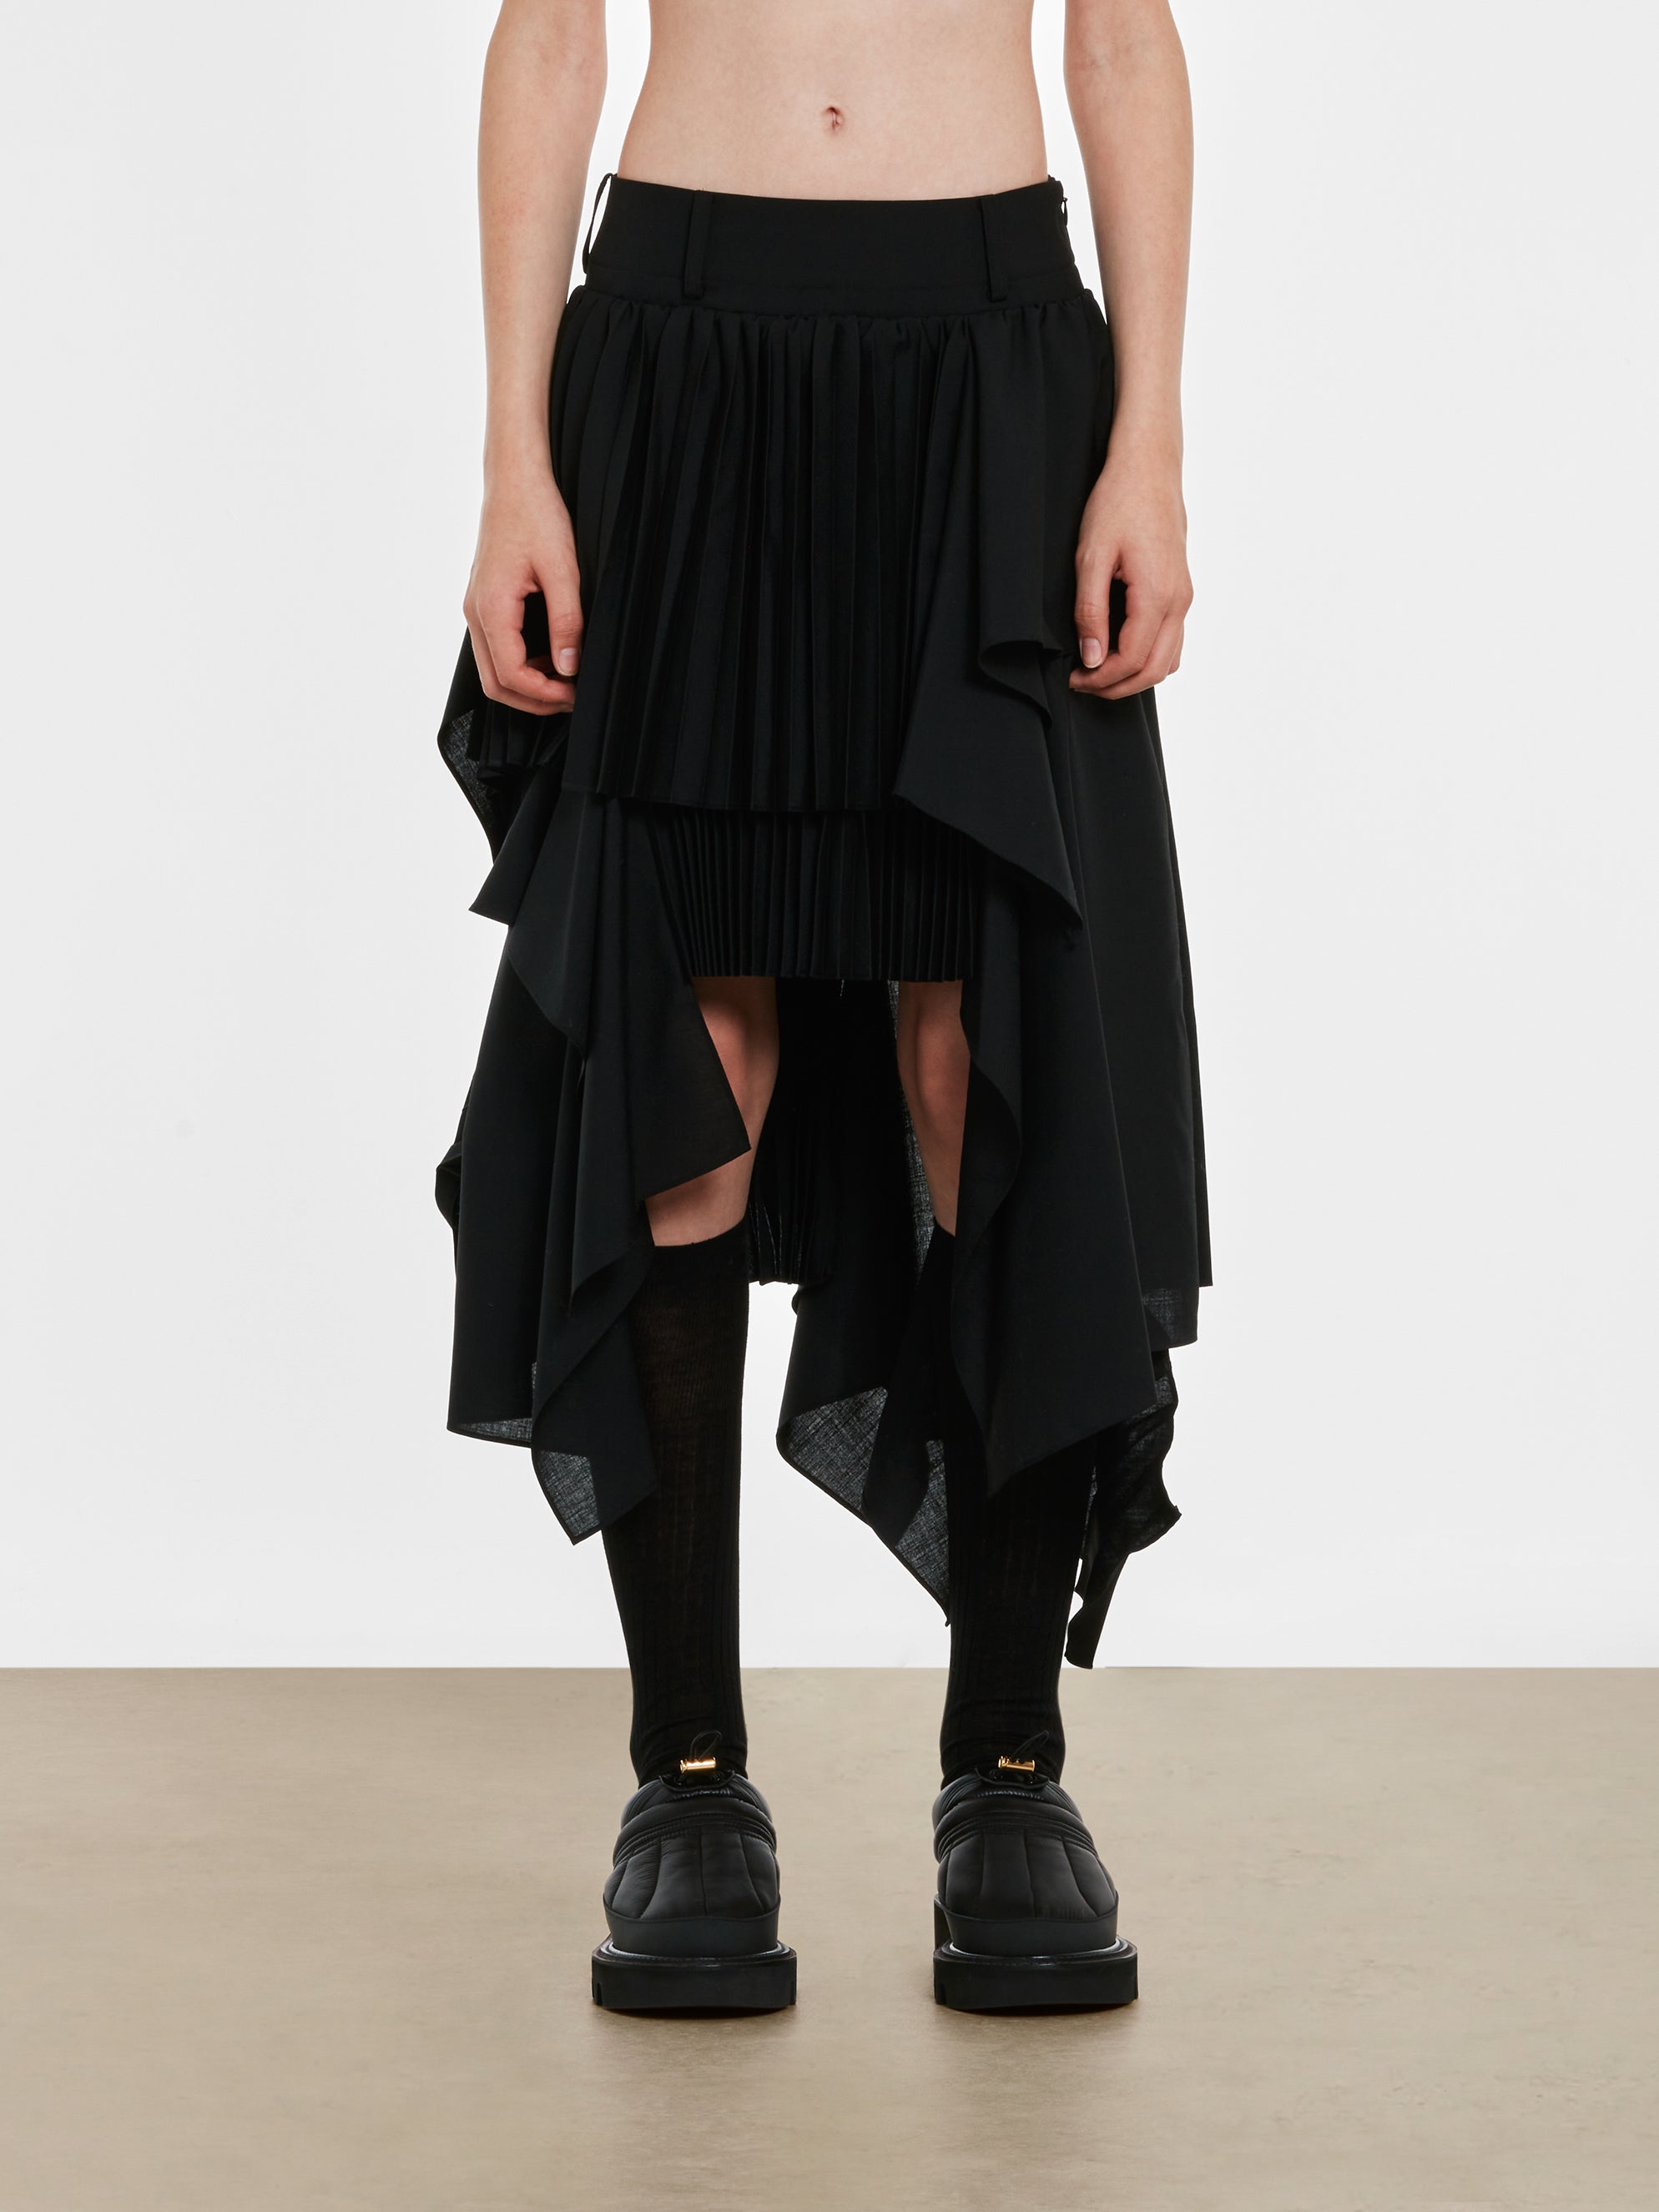 Sacai - Women’s Suiting Mix Skirt - (Black) view 2